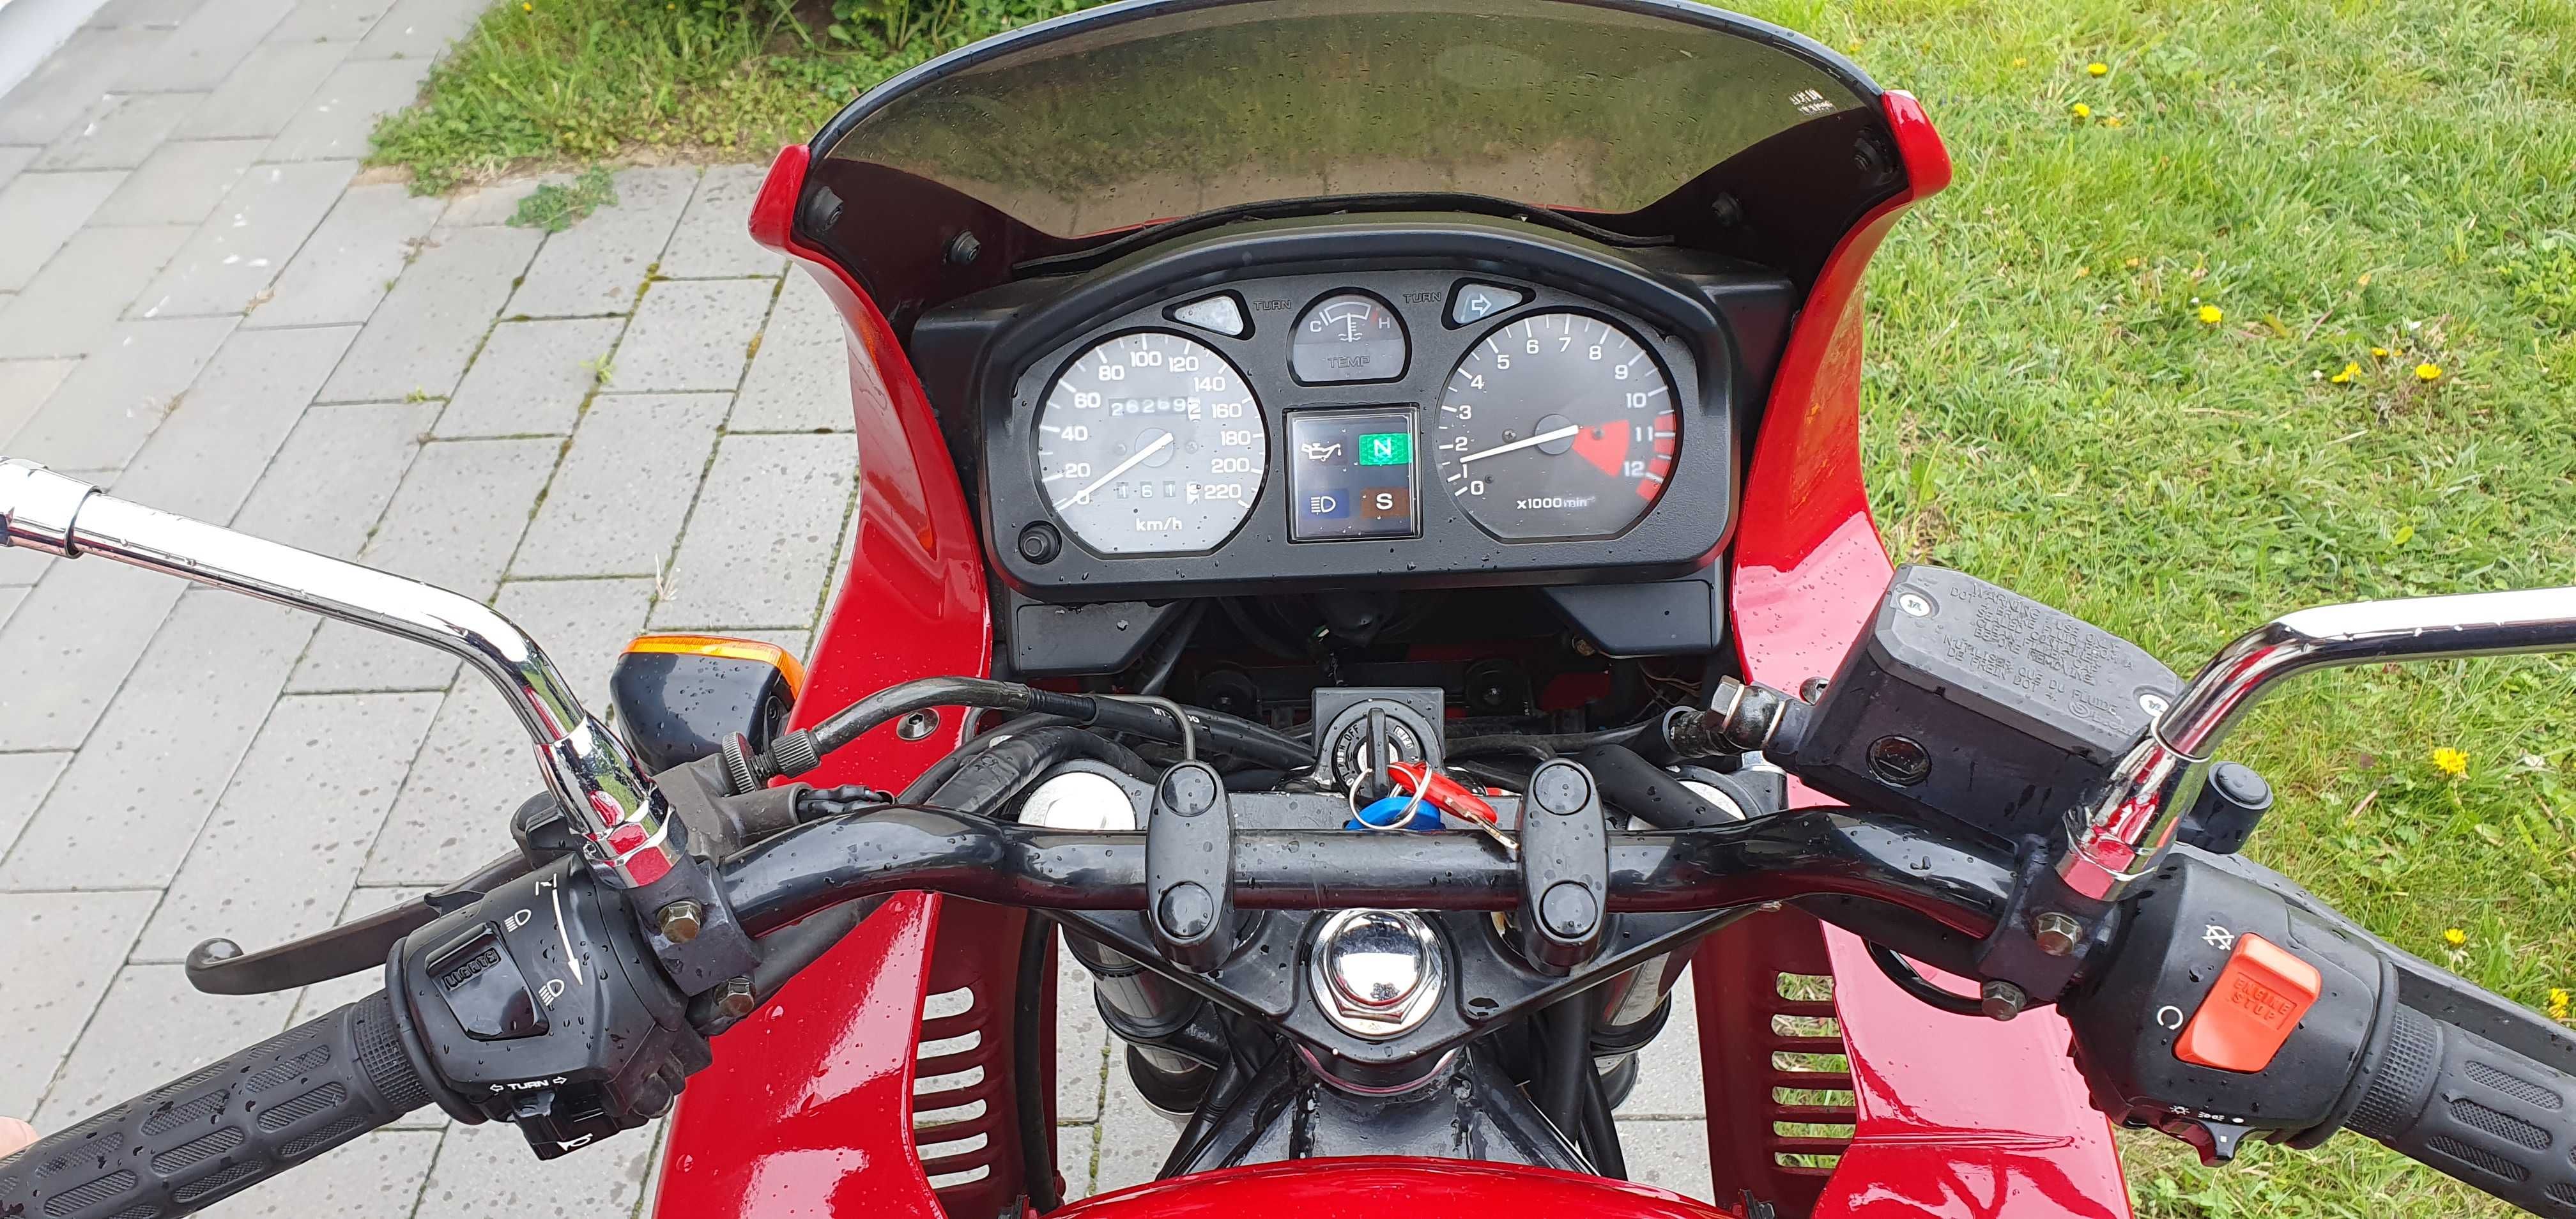 Sprzedam Motocykl Honda CB500s Łódź